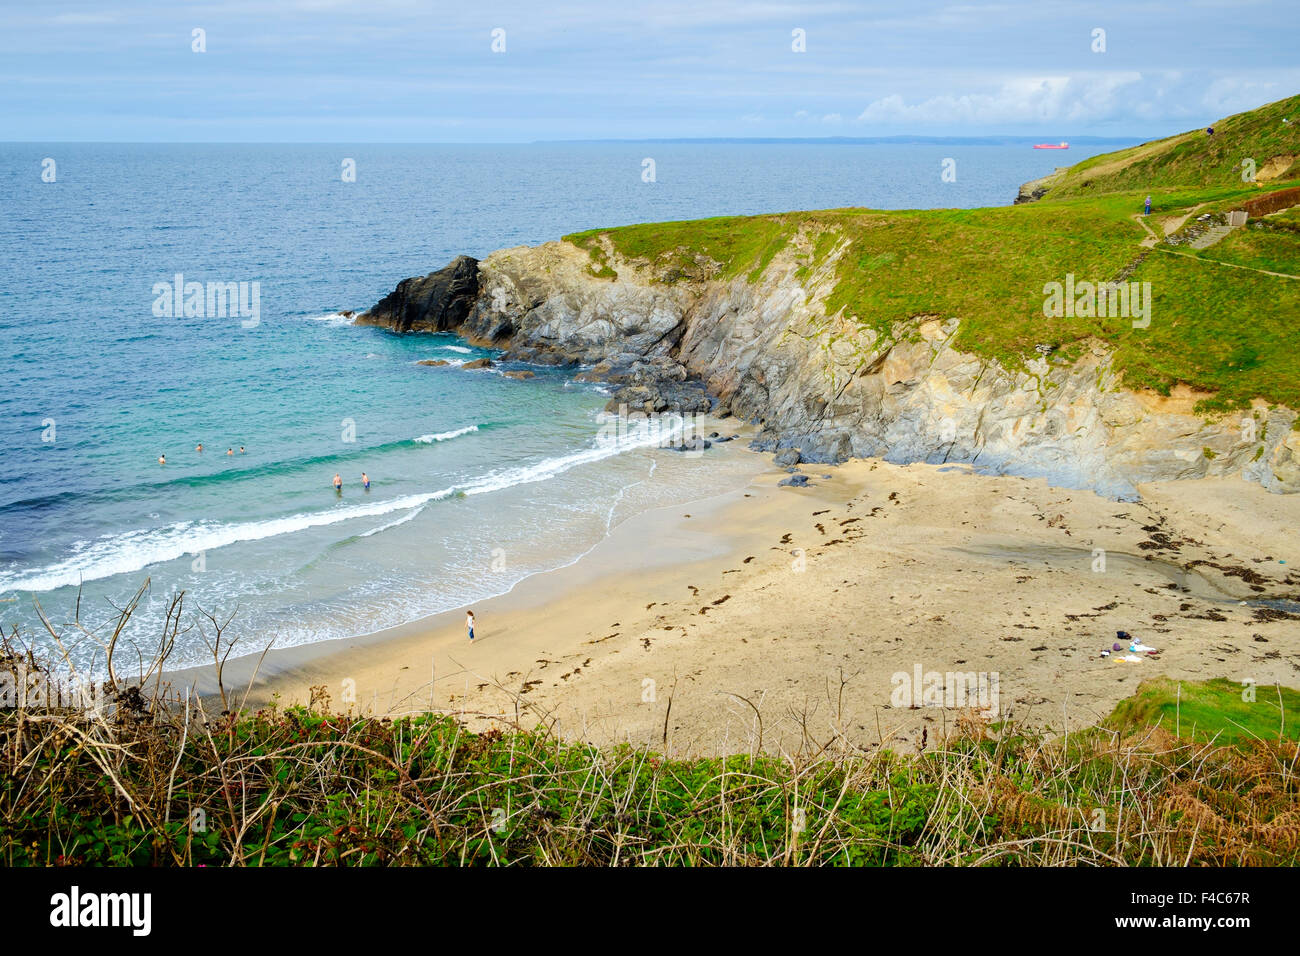 Polurrian Beach, Mullion, Cornwall, England, UK - with people swimming Stock Photo